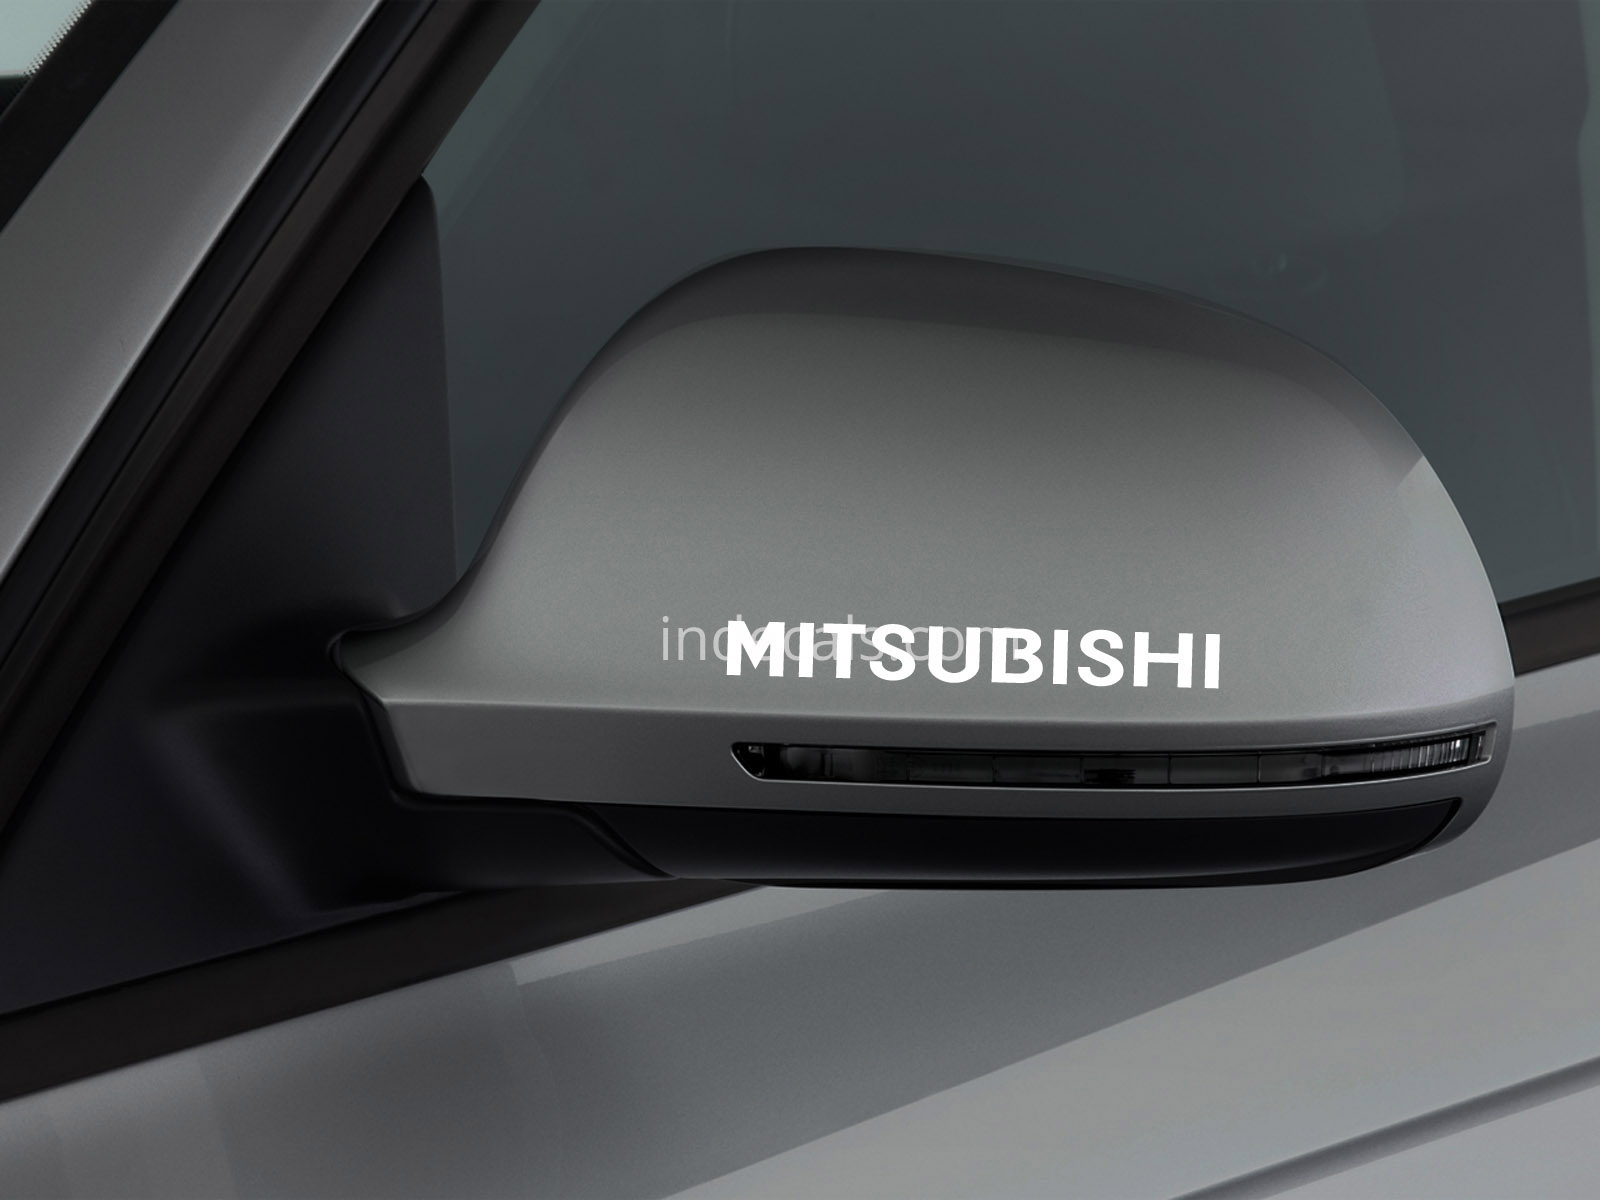 3 x Mitsubishi Stickers for Mirror - White